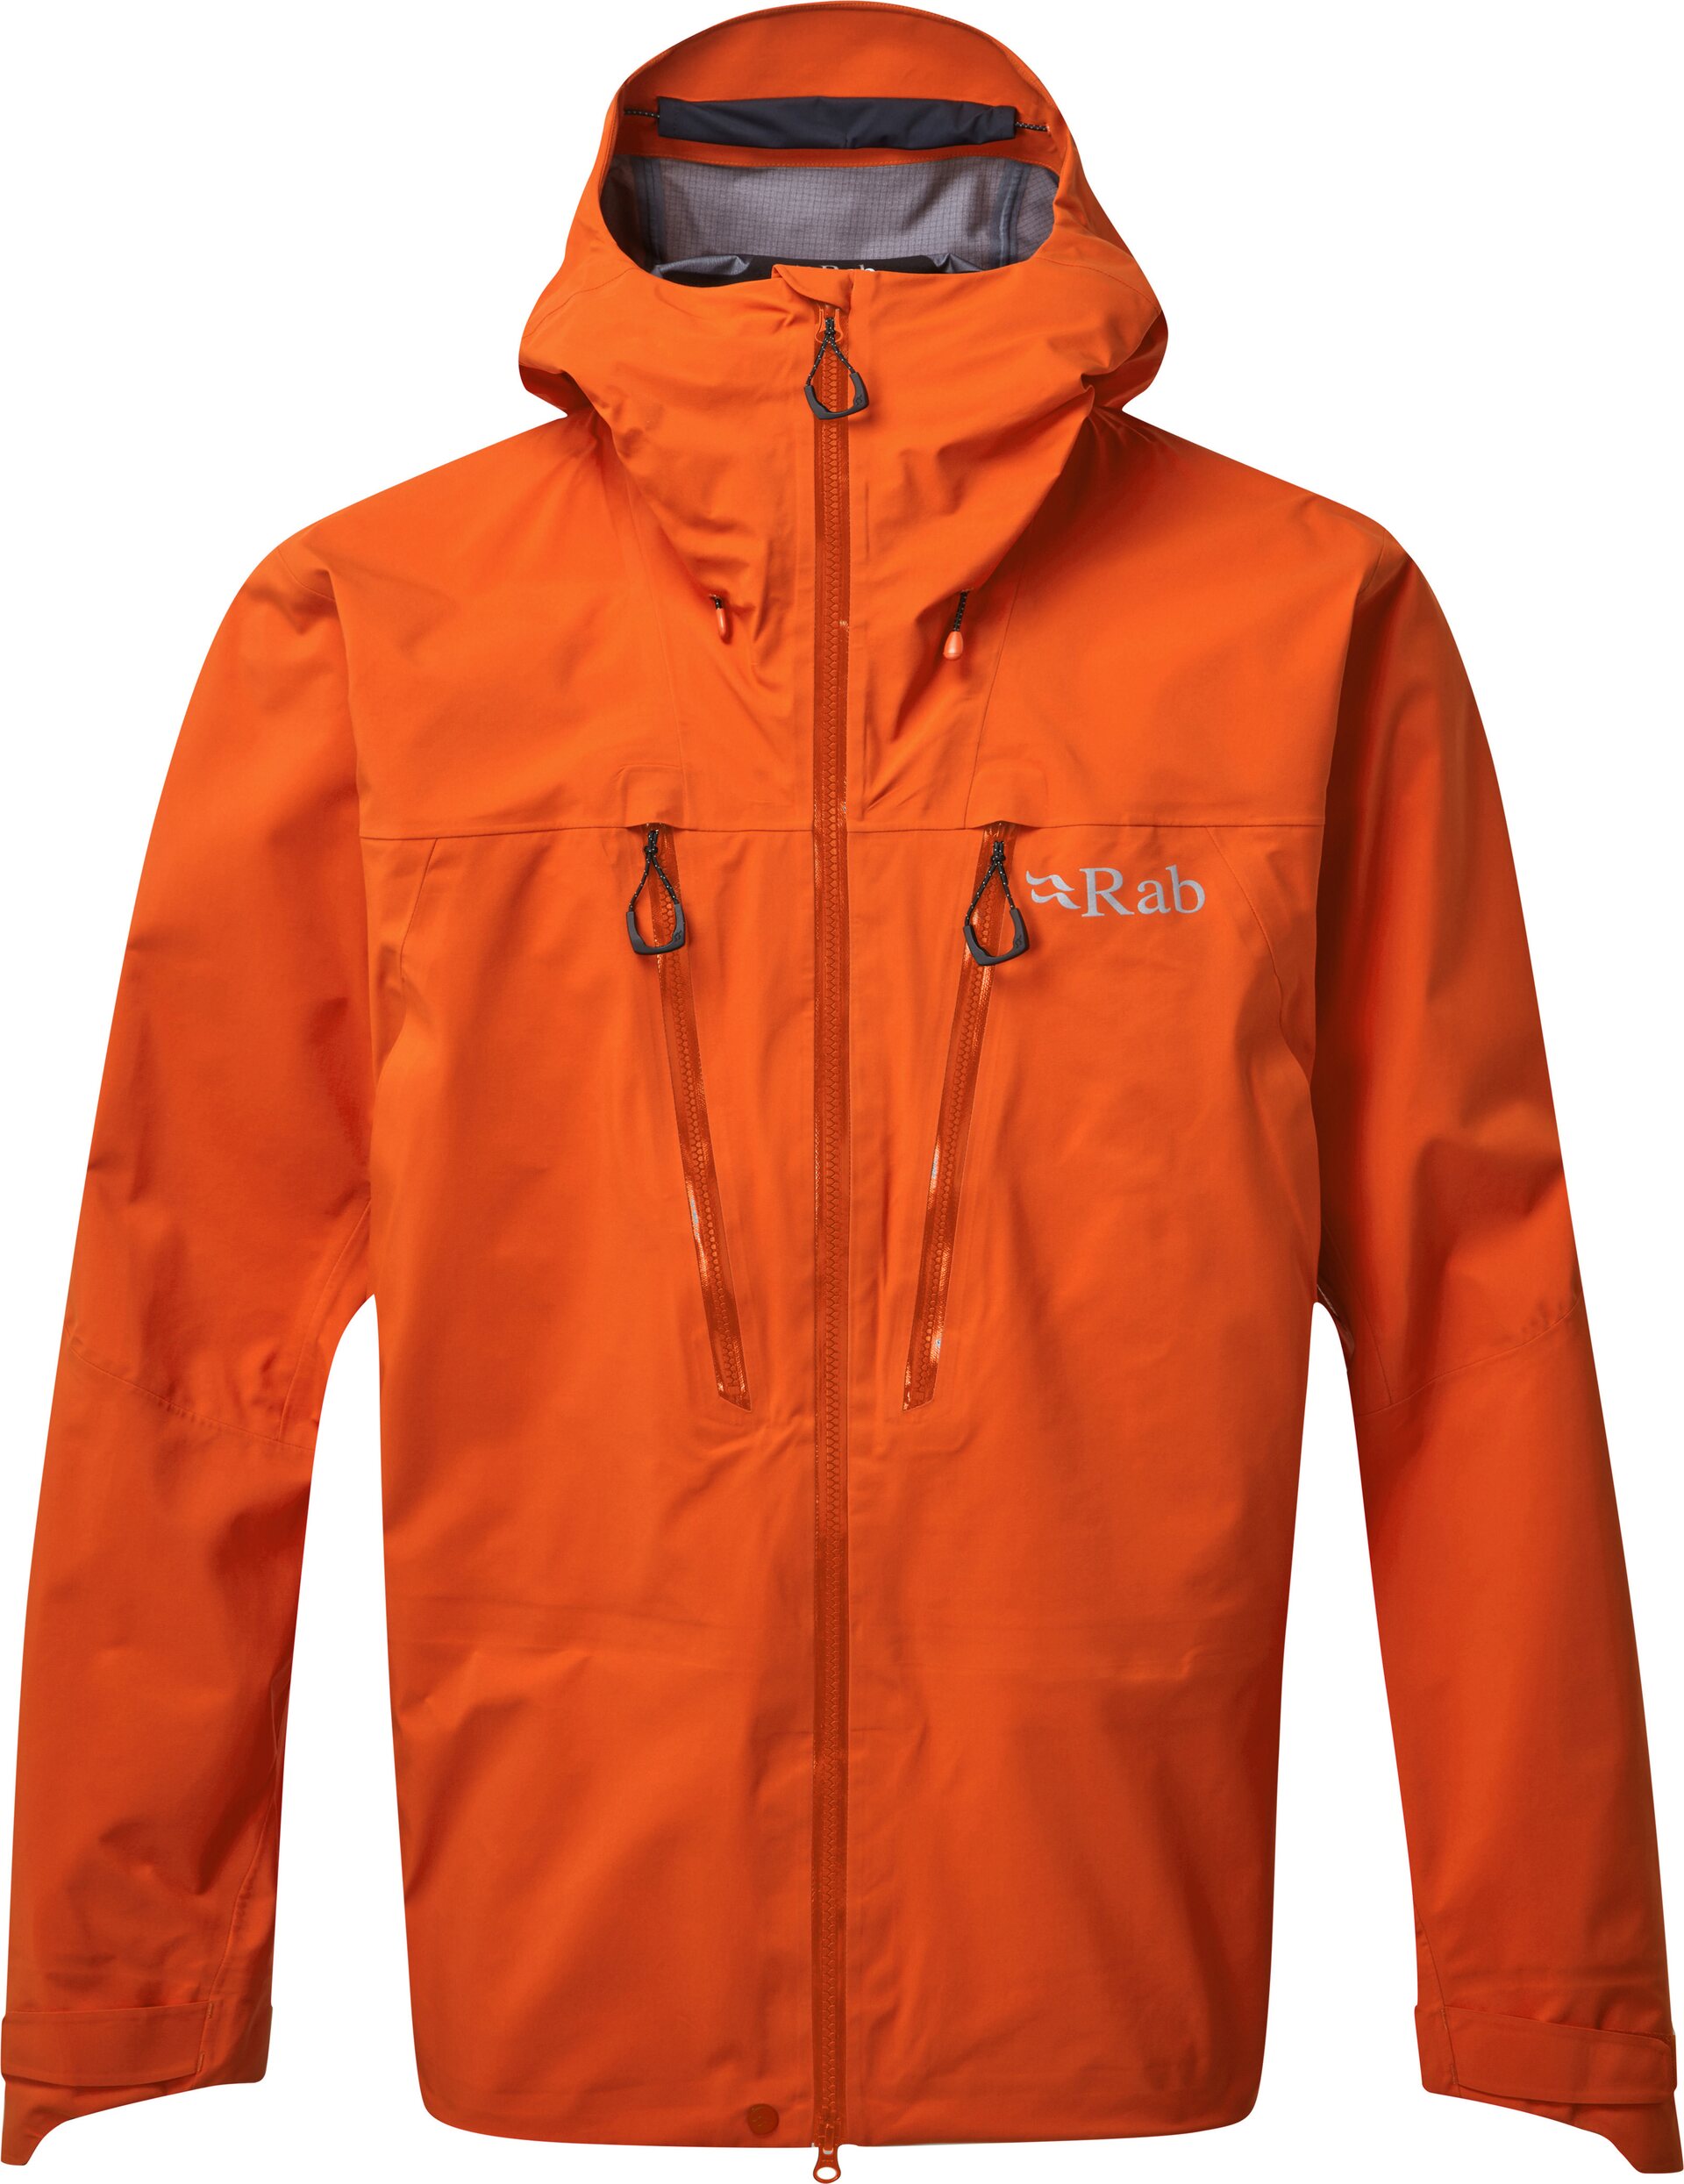 RAB Latok GTX Jacket | Men's Waterproof Jackets | Varuste.net English